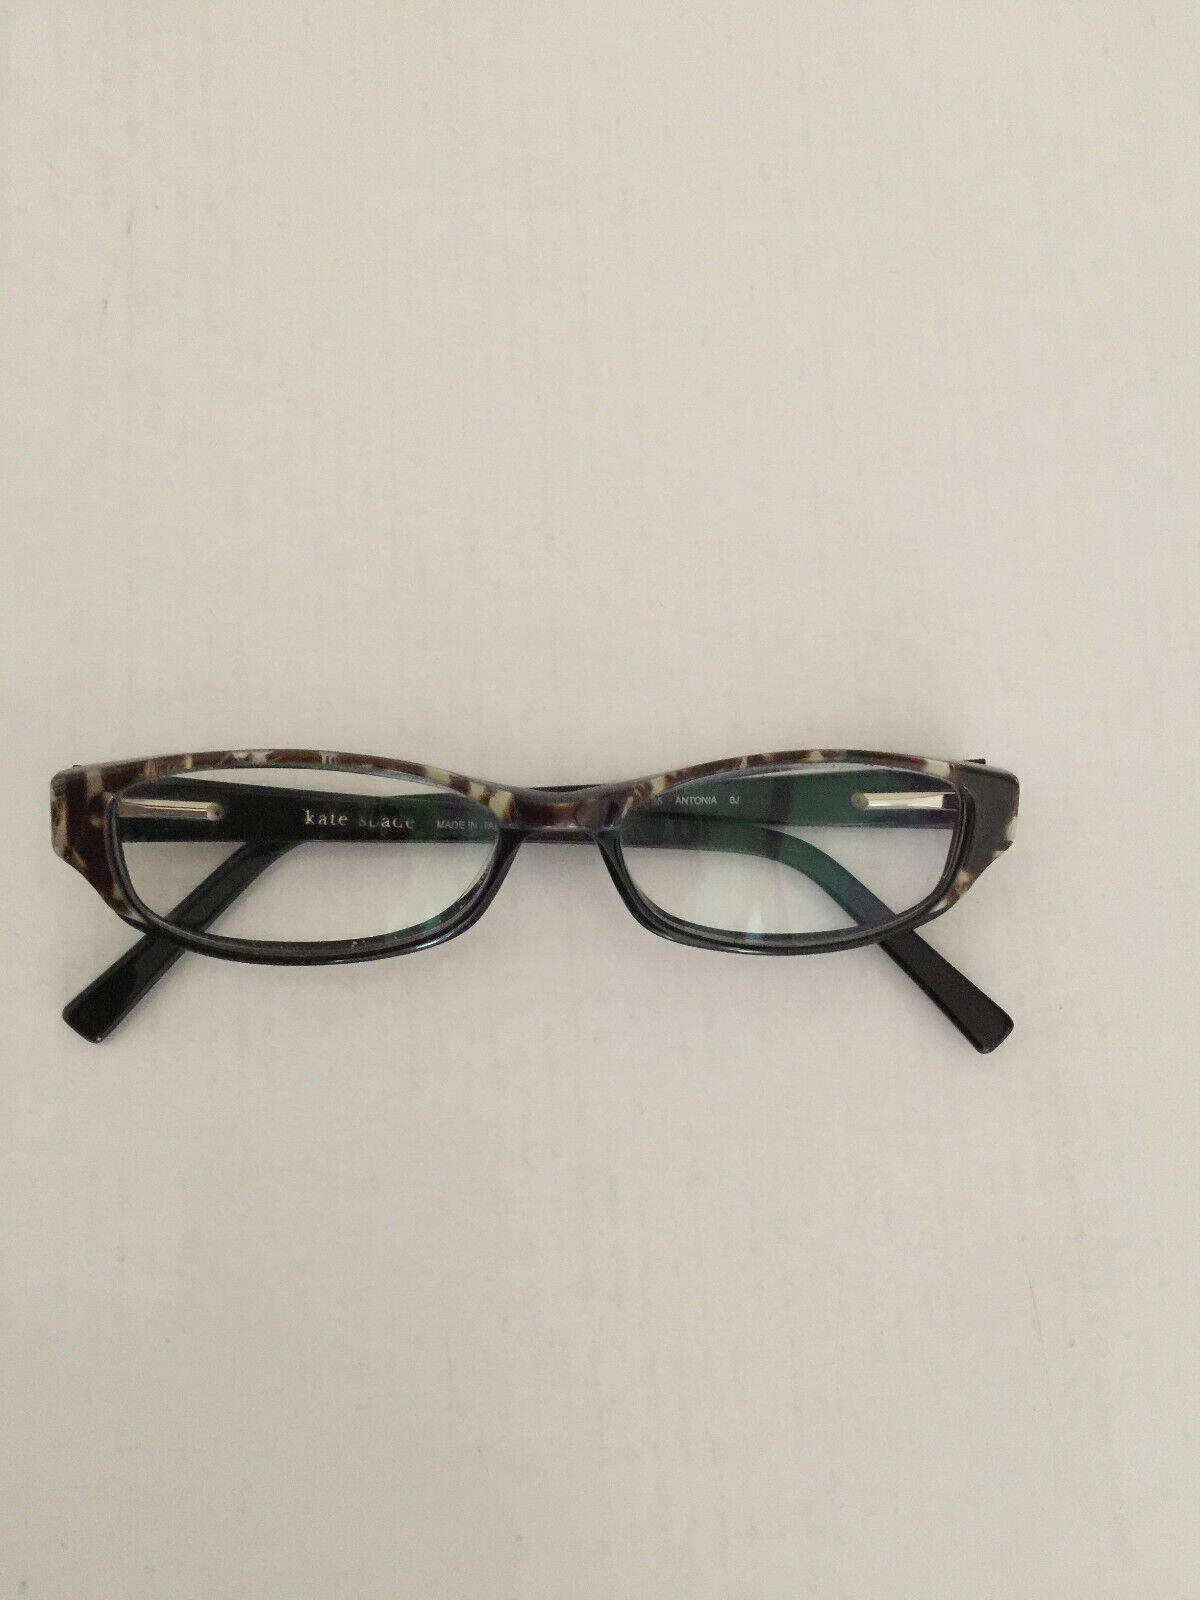 KATE SPADE “ANTONIA” Eyeglasses Tortoise Frame 135 Made in Italy 